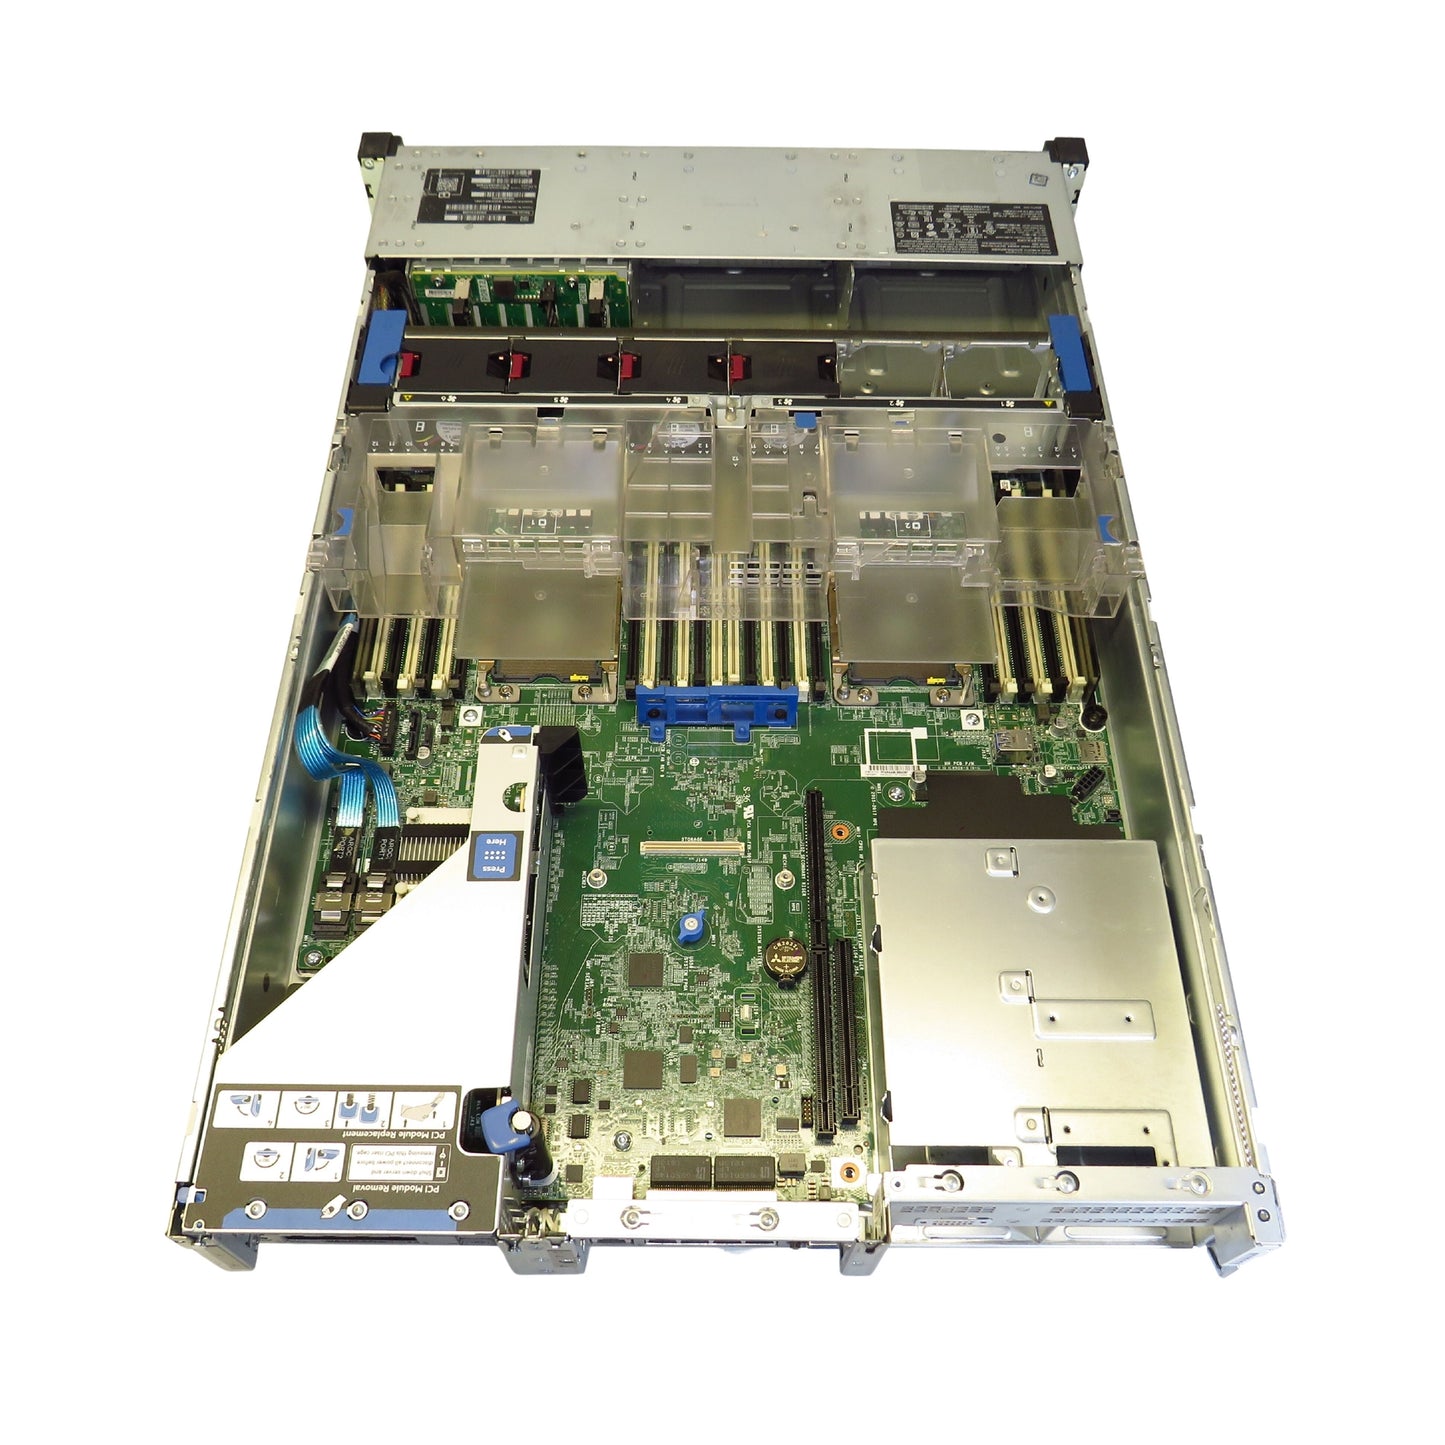 HPE 868703-B21 ProLiant DL380 Gen10 8 Bay SFF SAS/SATA 2U Server CTO (Refurbished)